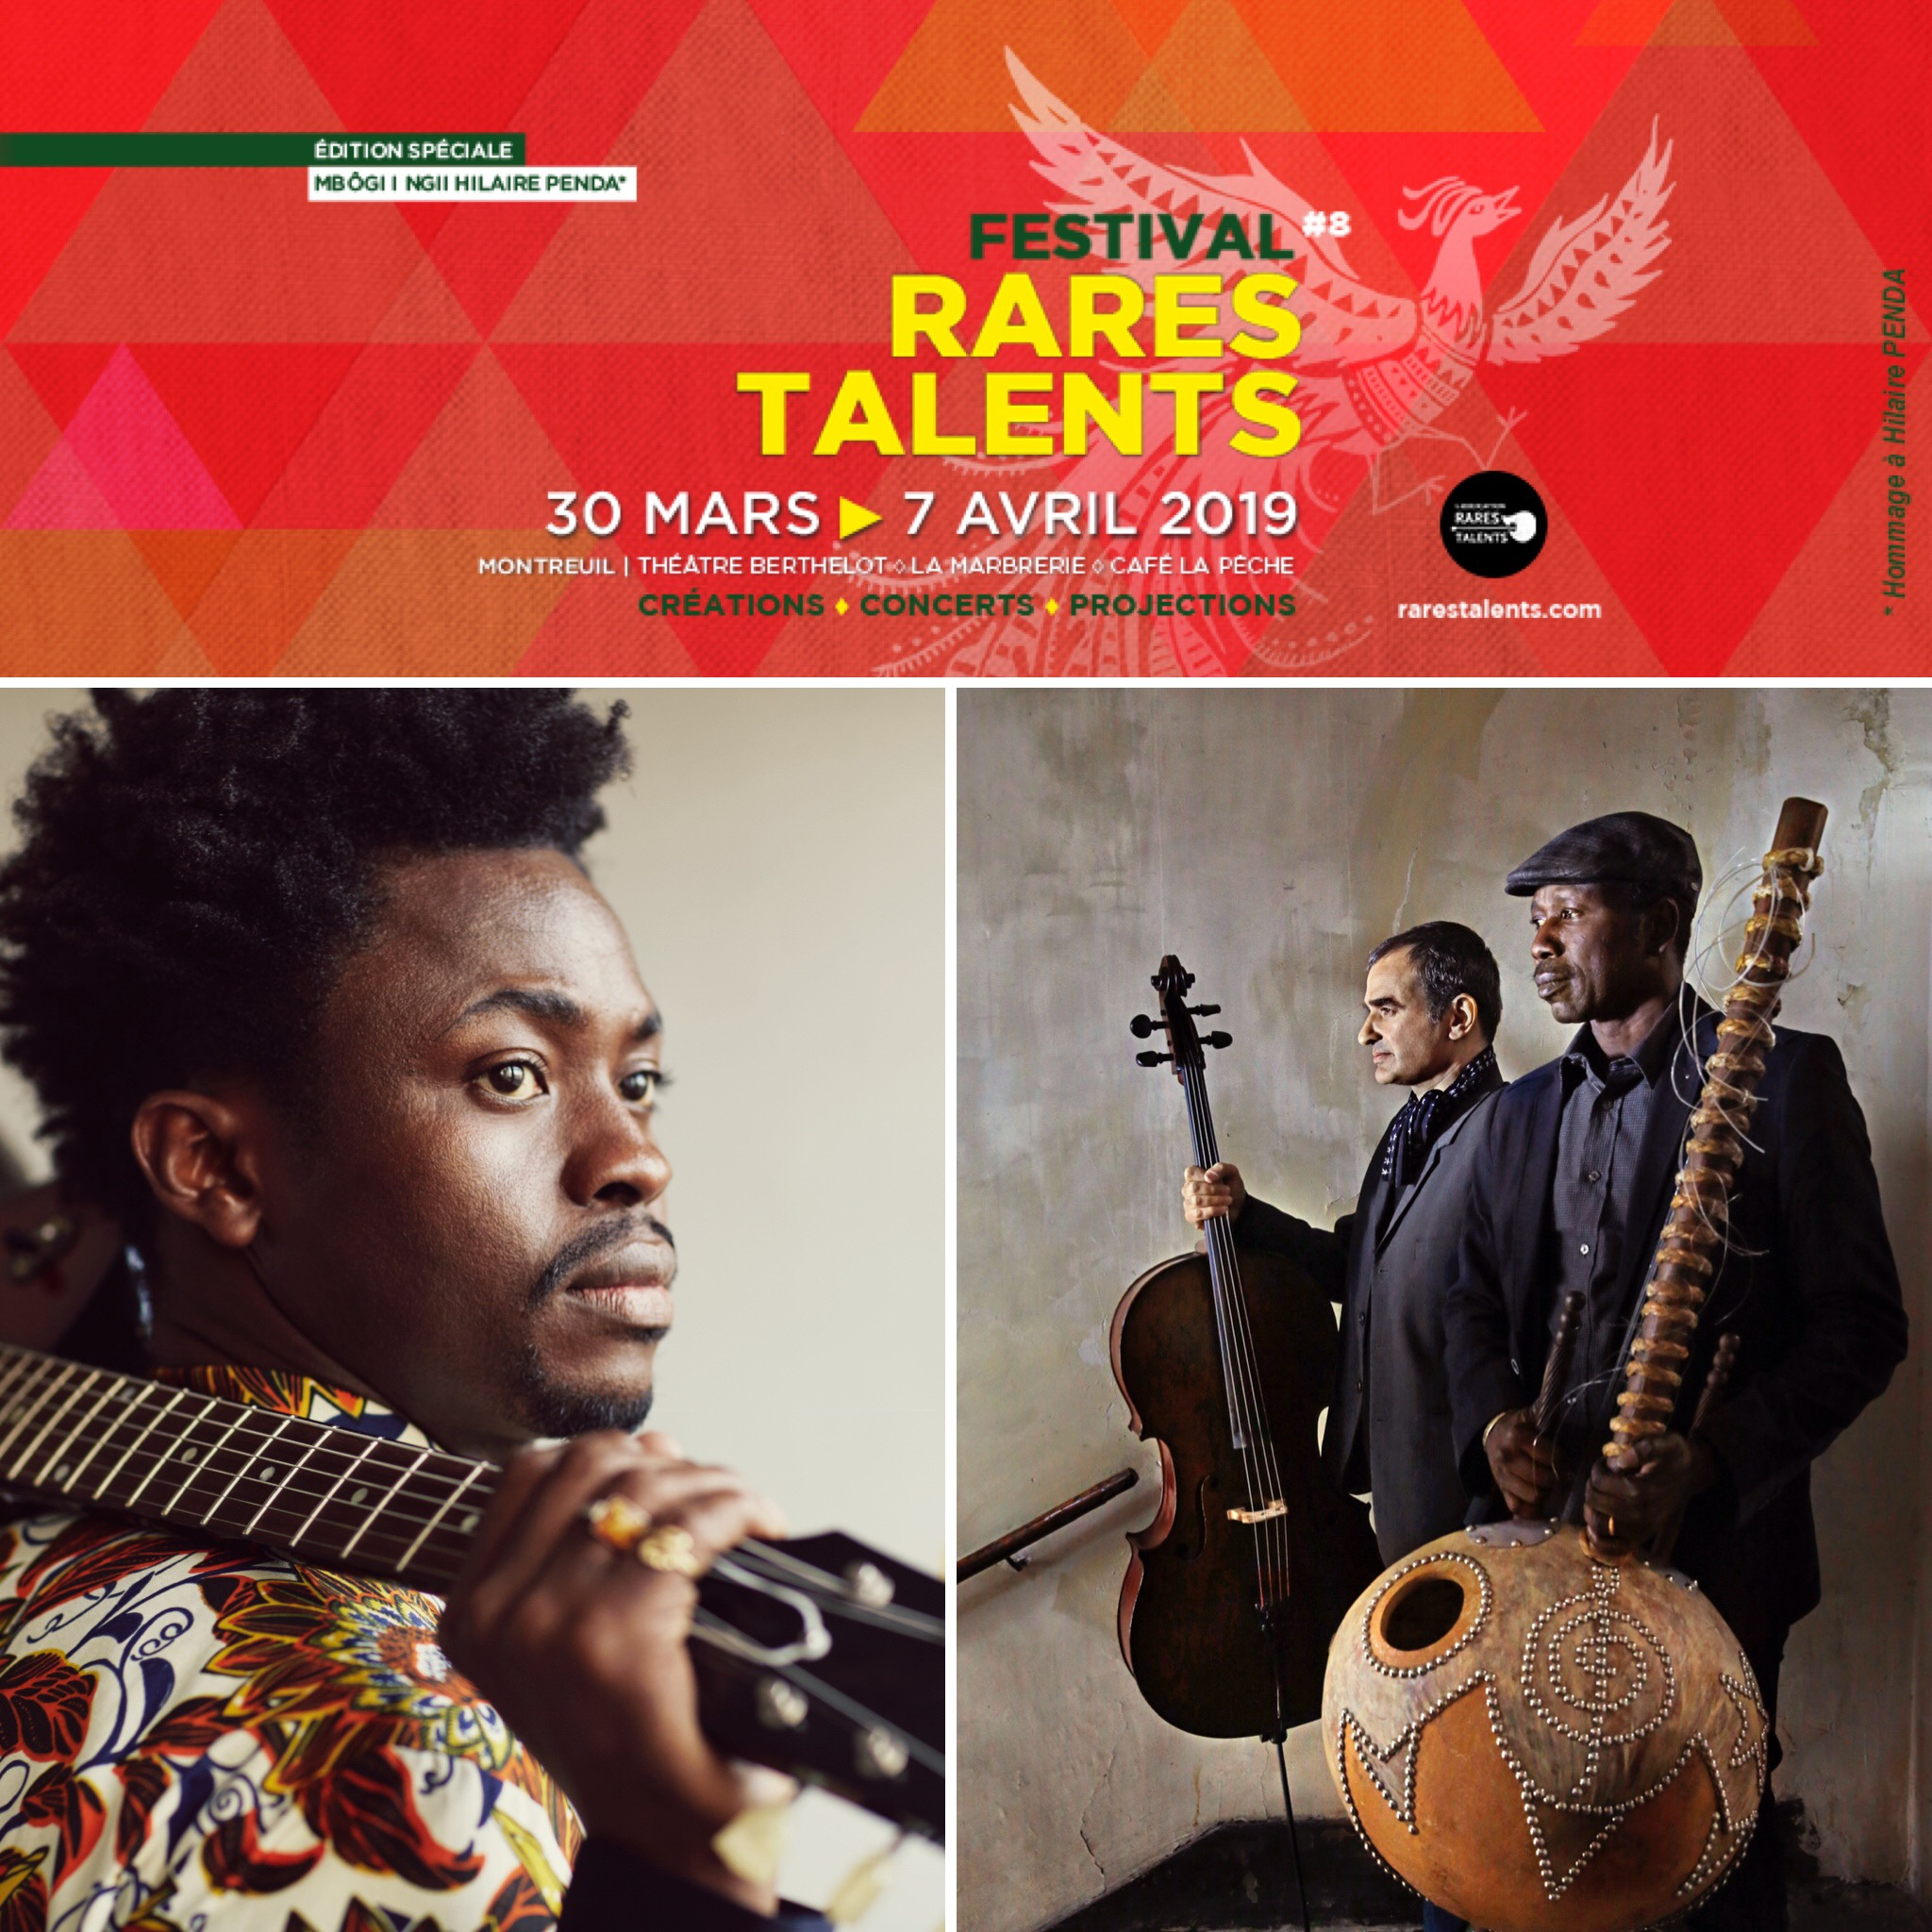 Moh ! Kouyaté + Ballaké Sissoko & Vincent Ségal  ✫ Festival Rares Talents #8